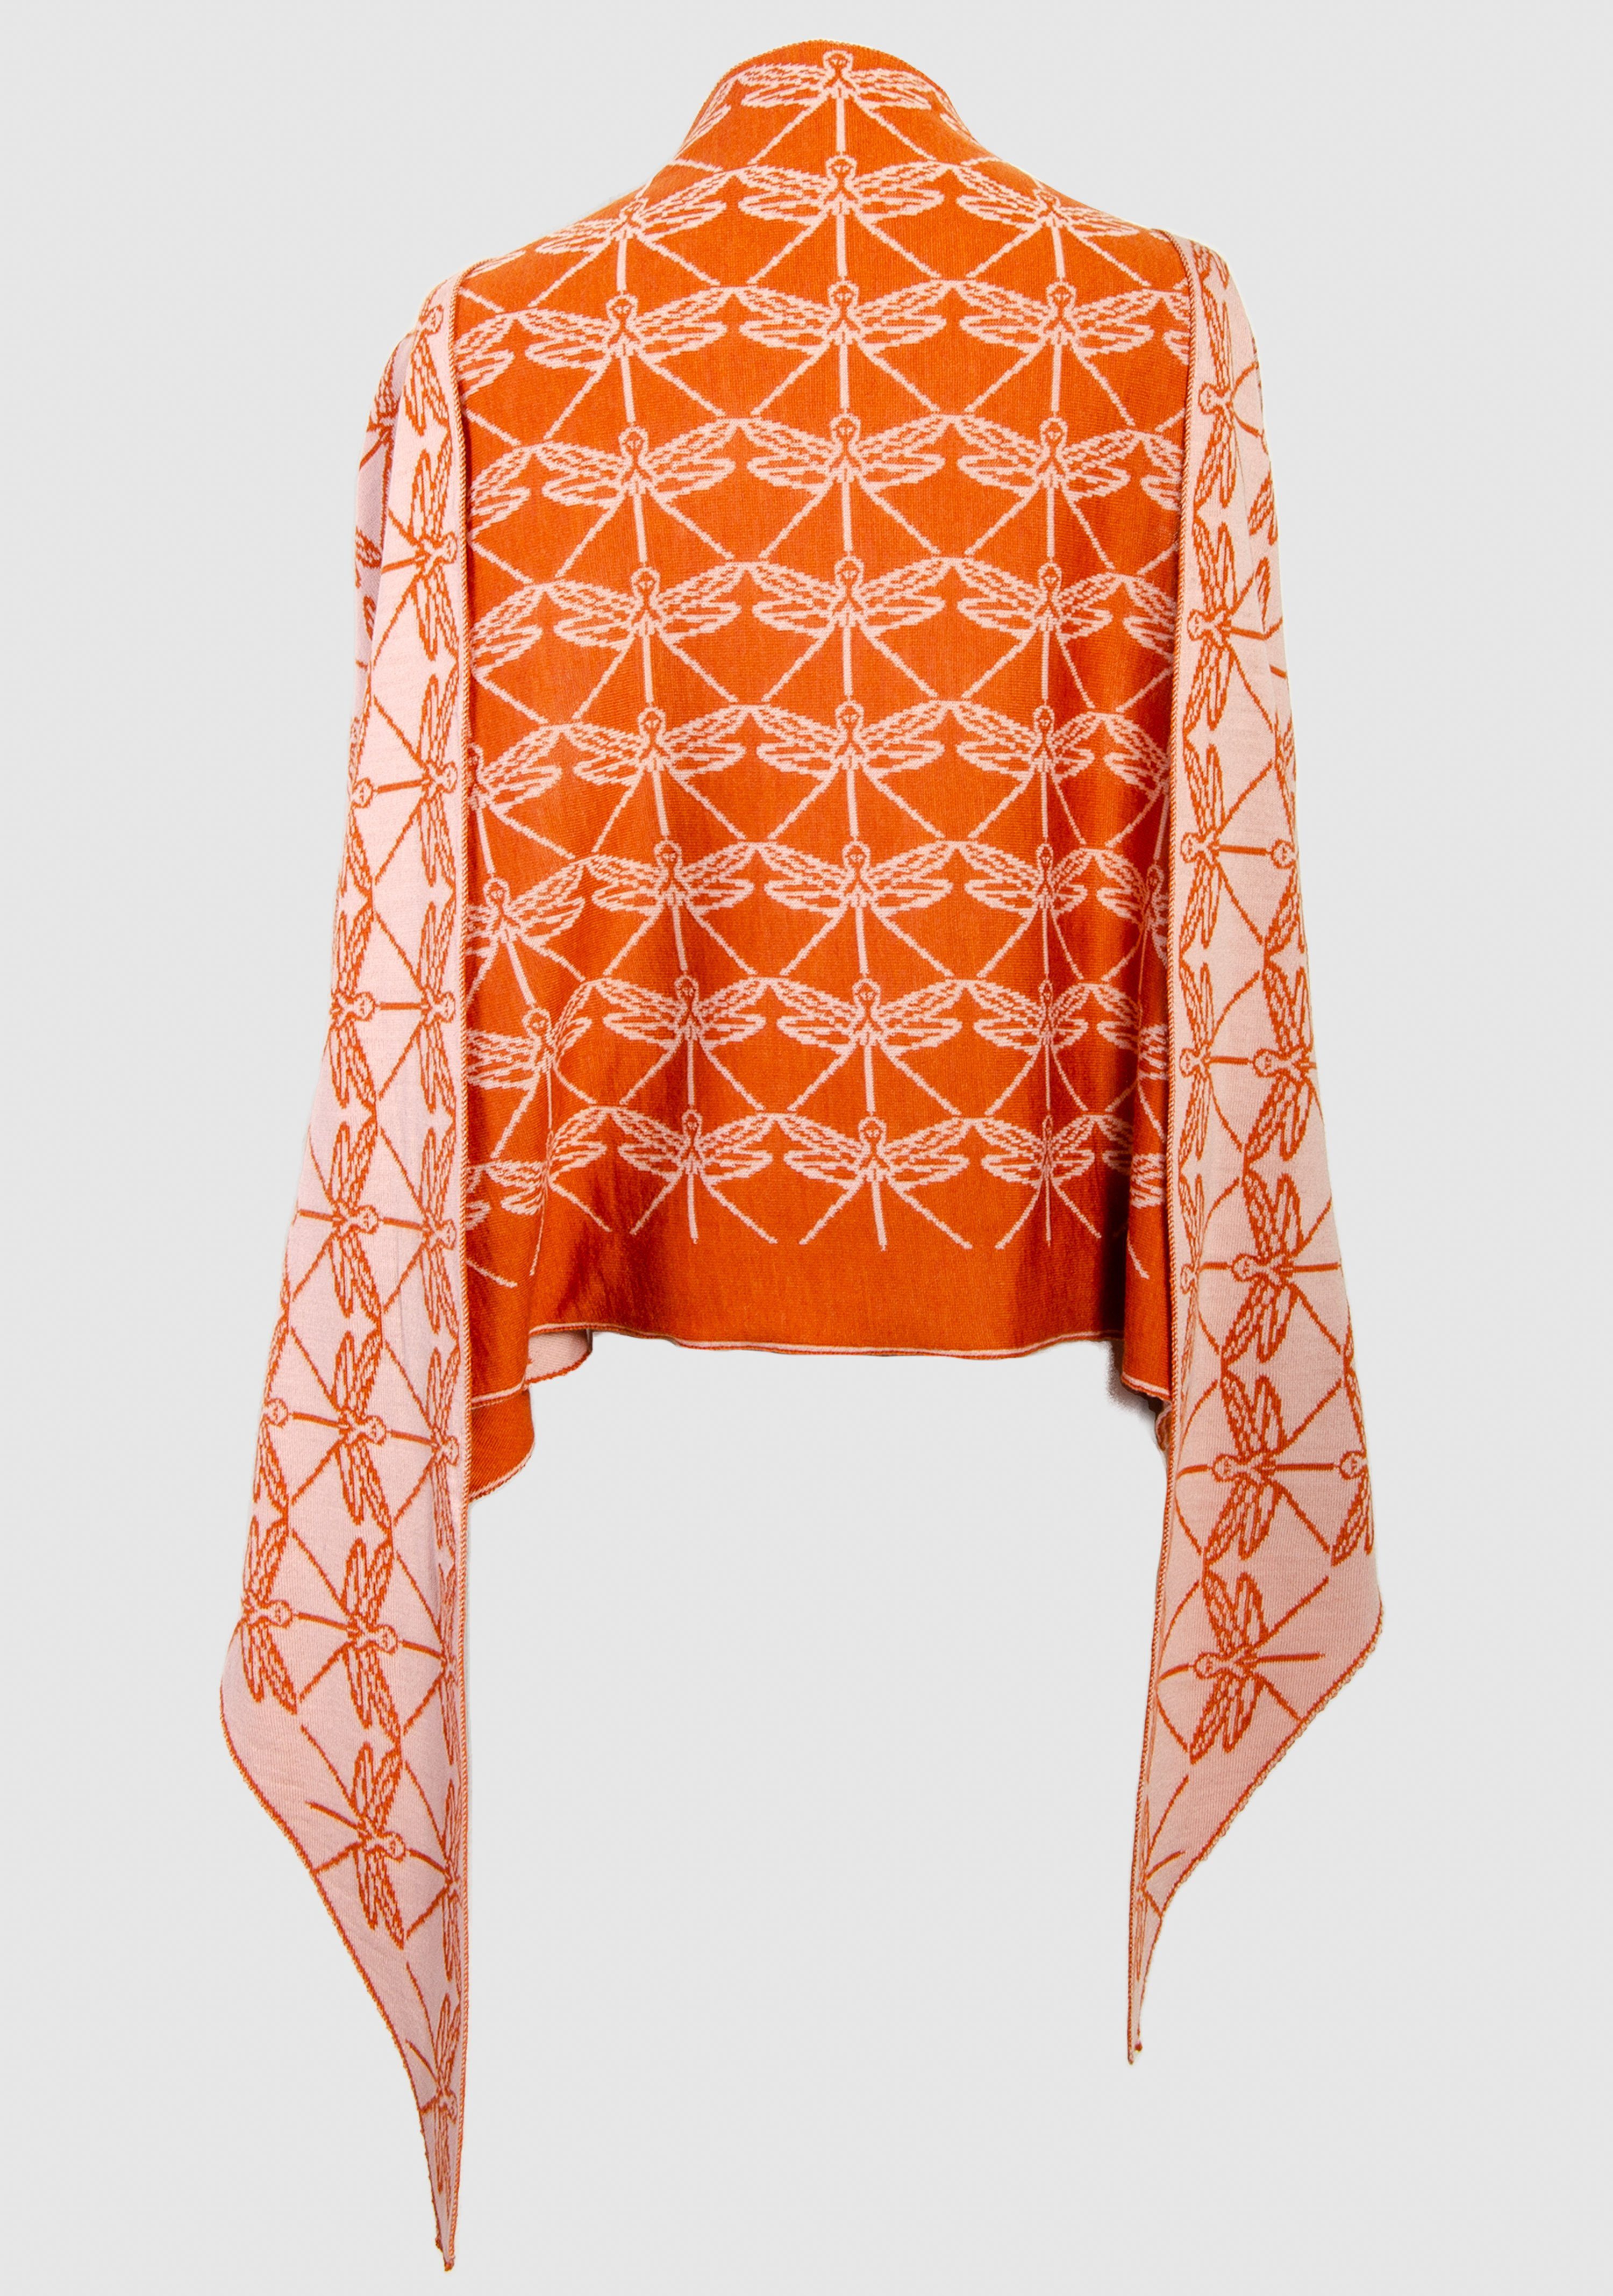 LANARTO slow fashion extrasoft Libelle Merino zweifarbig 100% Modetuch orange_rosa Schultertuch